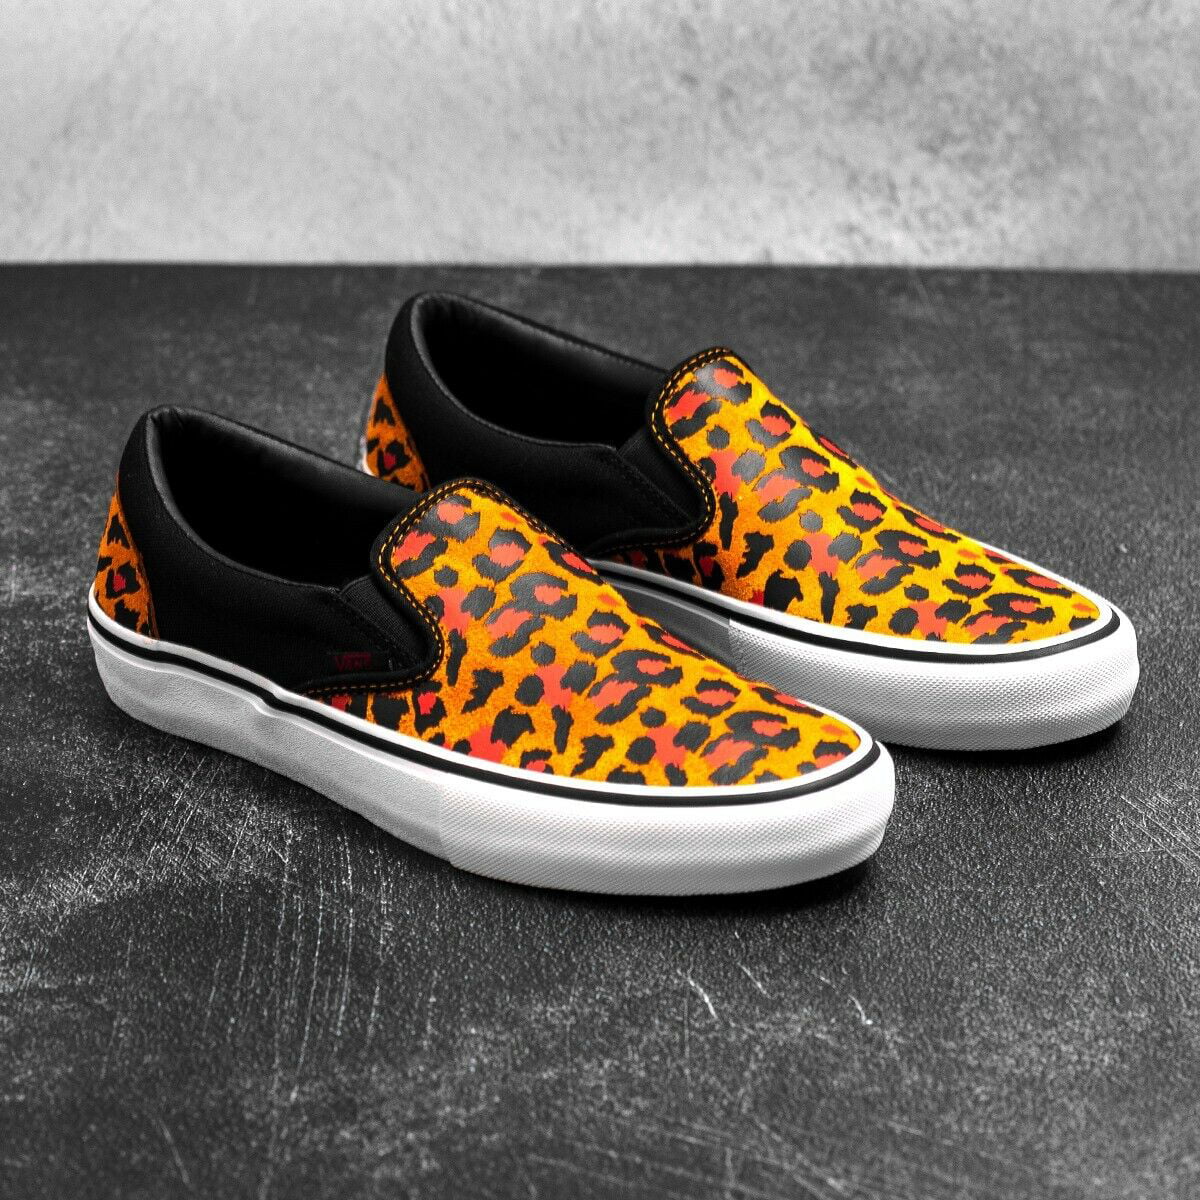 Vans Slip On Pro Punk Black/True White Leopard Men's Skate Shoes Size 12 - Walmart.com